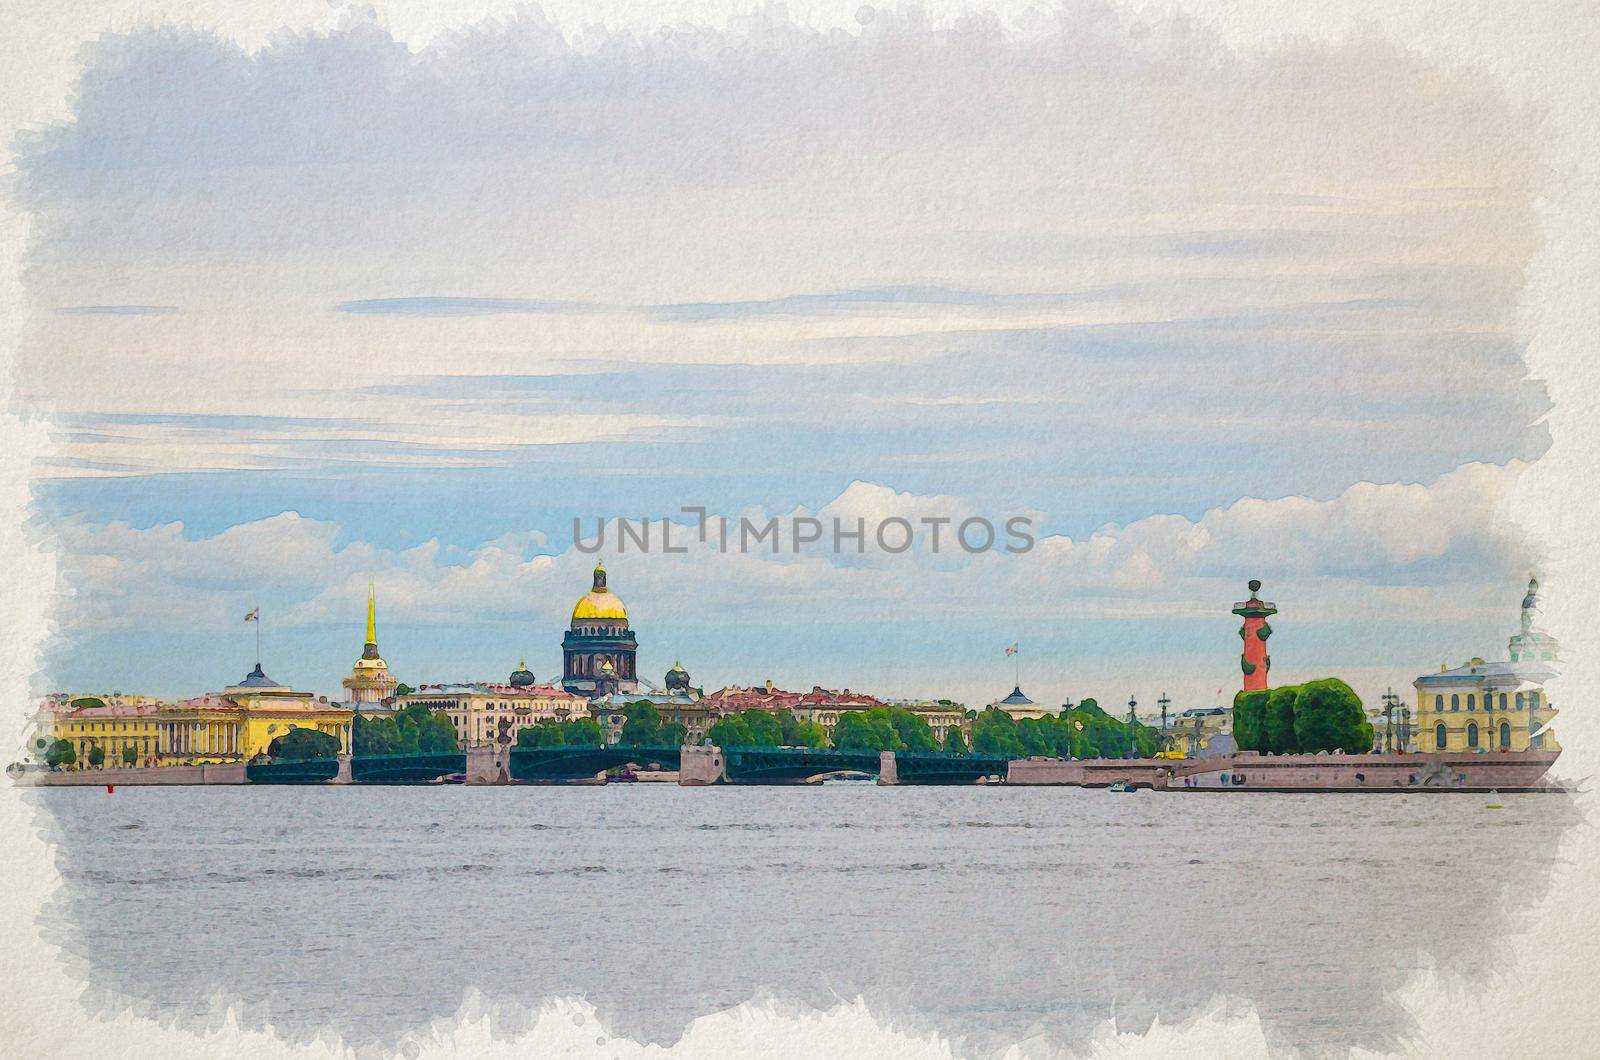 Watercolor drawing of Cityscape of Saint Petersburg Leningrad city with Palace Bridge bascule bridge across Neva river by Aliaksandr_Antanovich